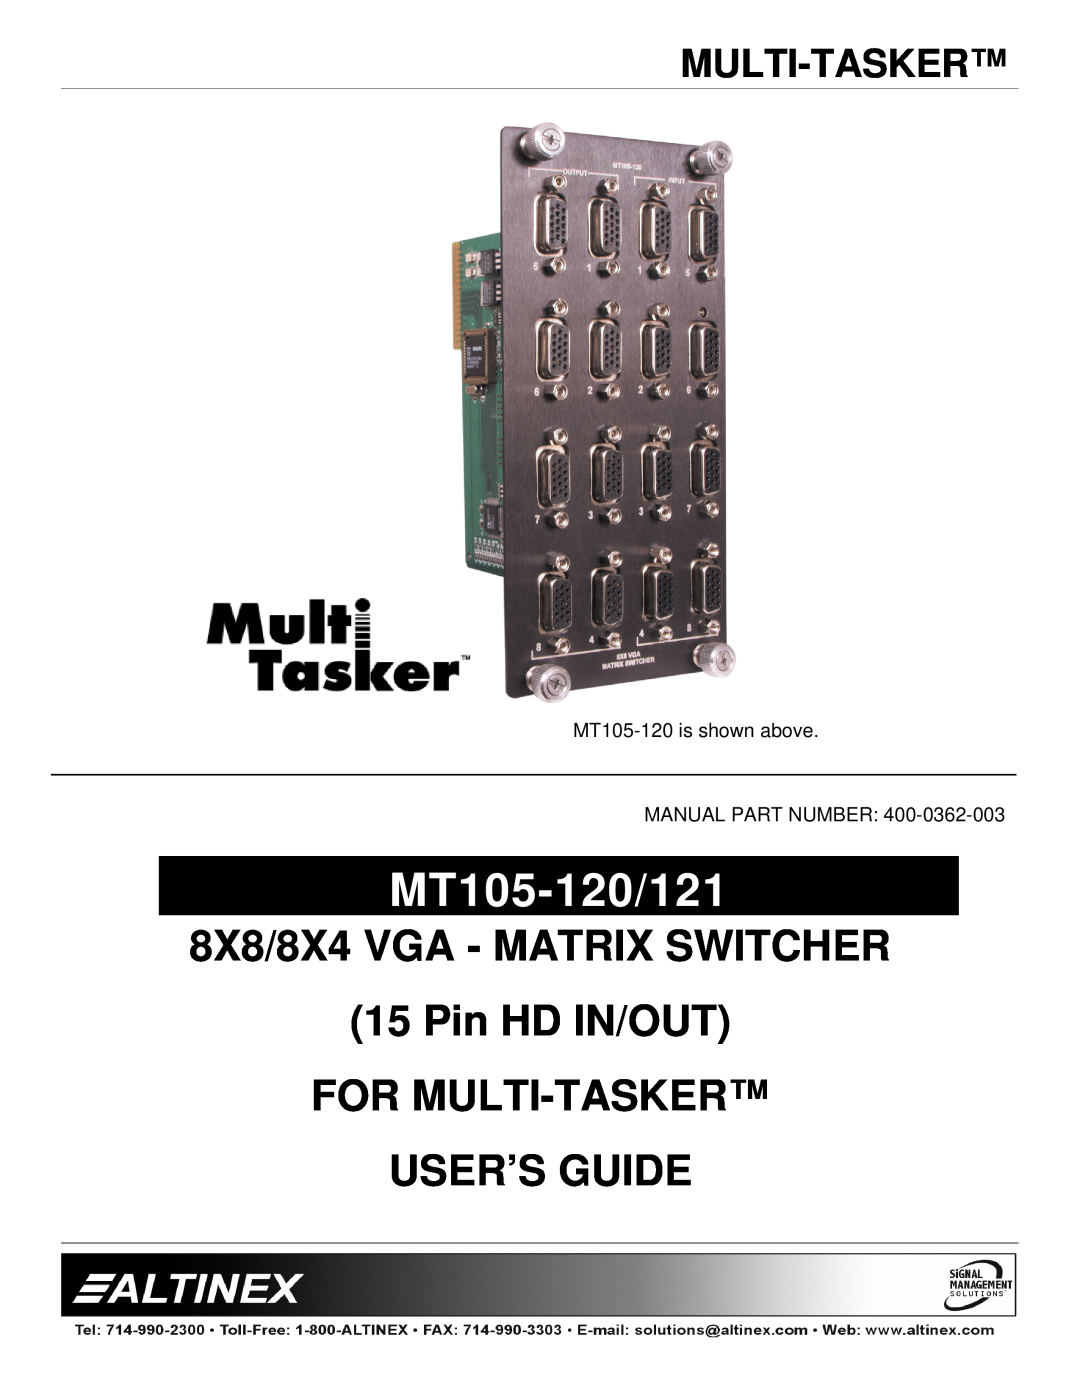 Altinex MT105-120/121 manual Multi-Tasker, 8X8/8X4 VGA - MATRIX SWITCHER 15 Pin HD IN/OUT FOR MULTI-TASKER, User’S Guide 